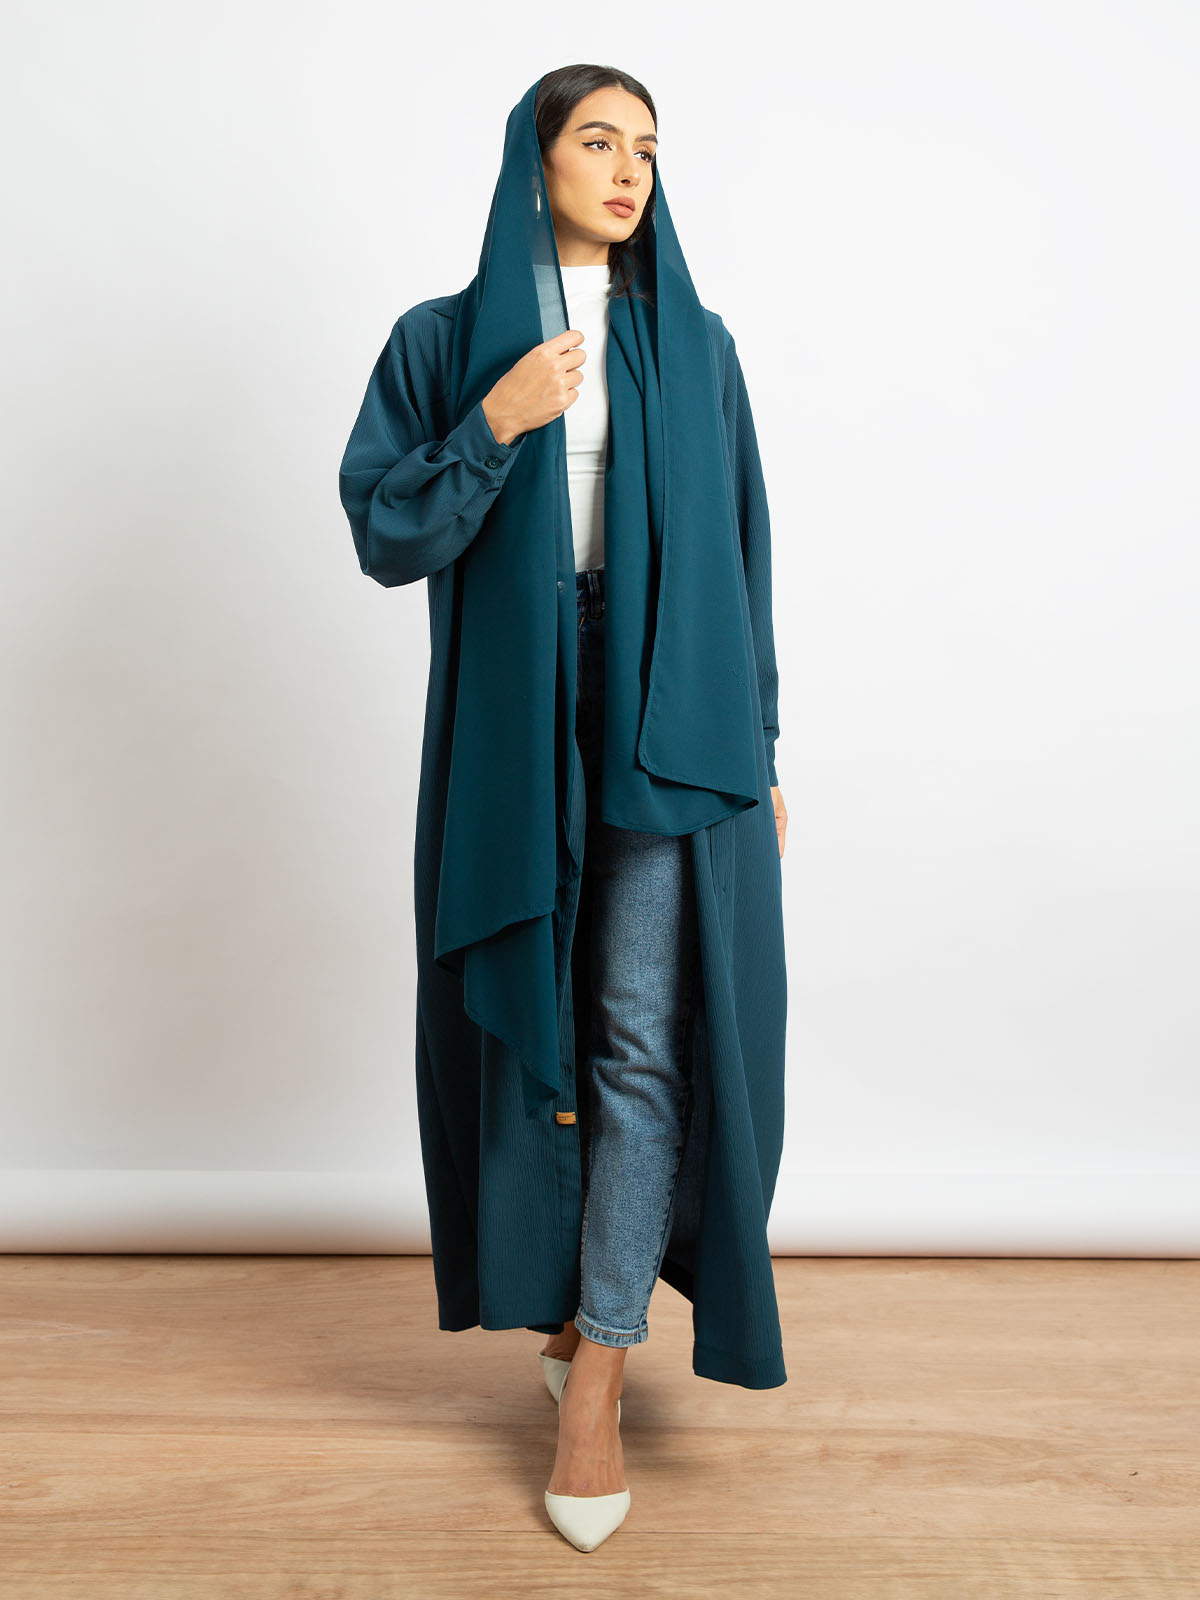 Kaafmeem women clothing regular fit teal color long shirt abaya in fancy yoryu fabric with hidden pockets